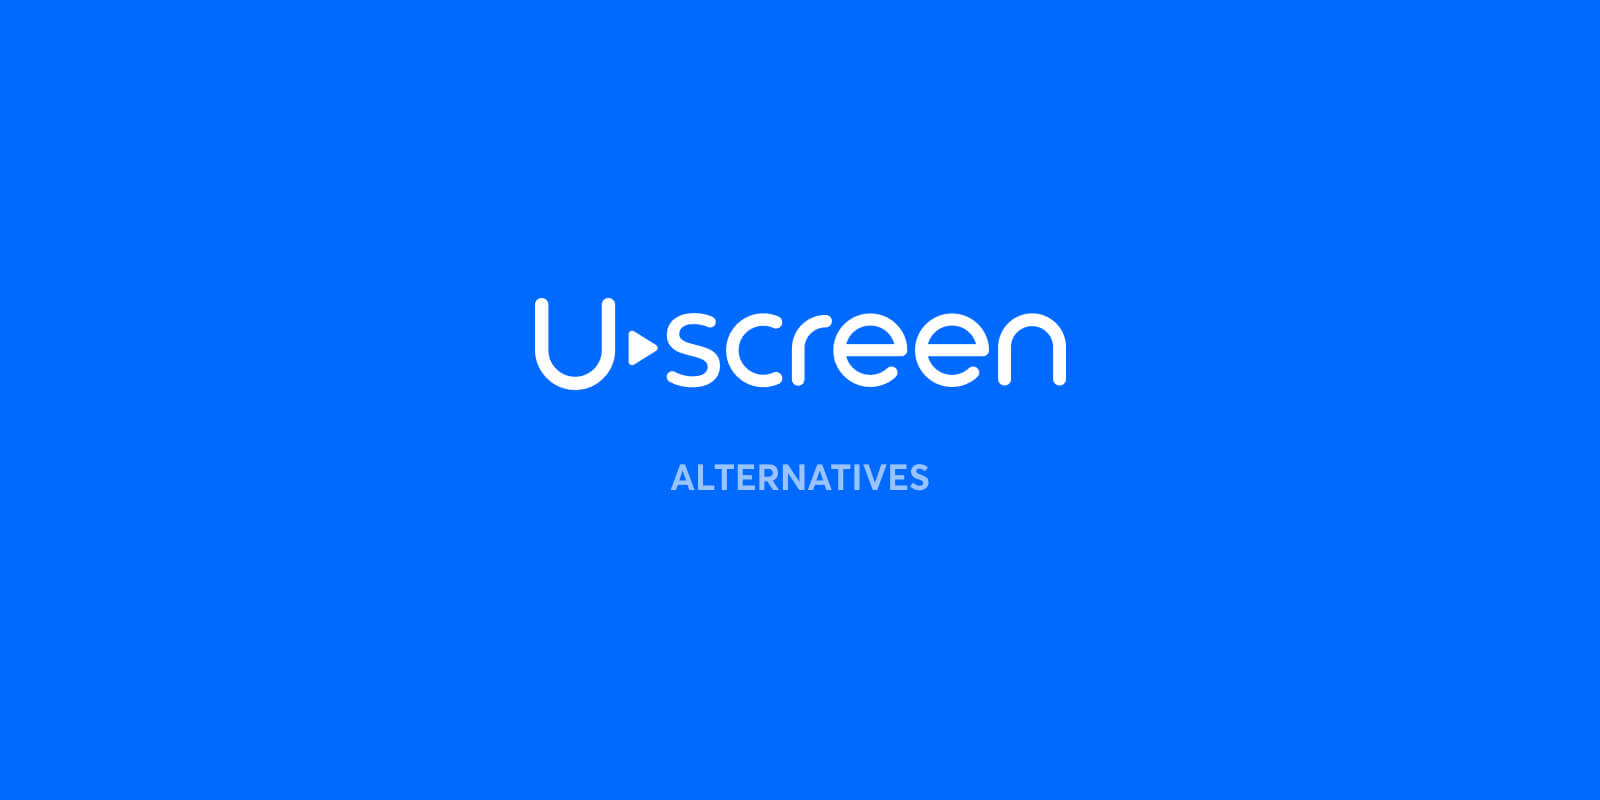 Uscreen alternatives